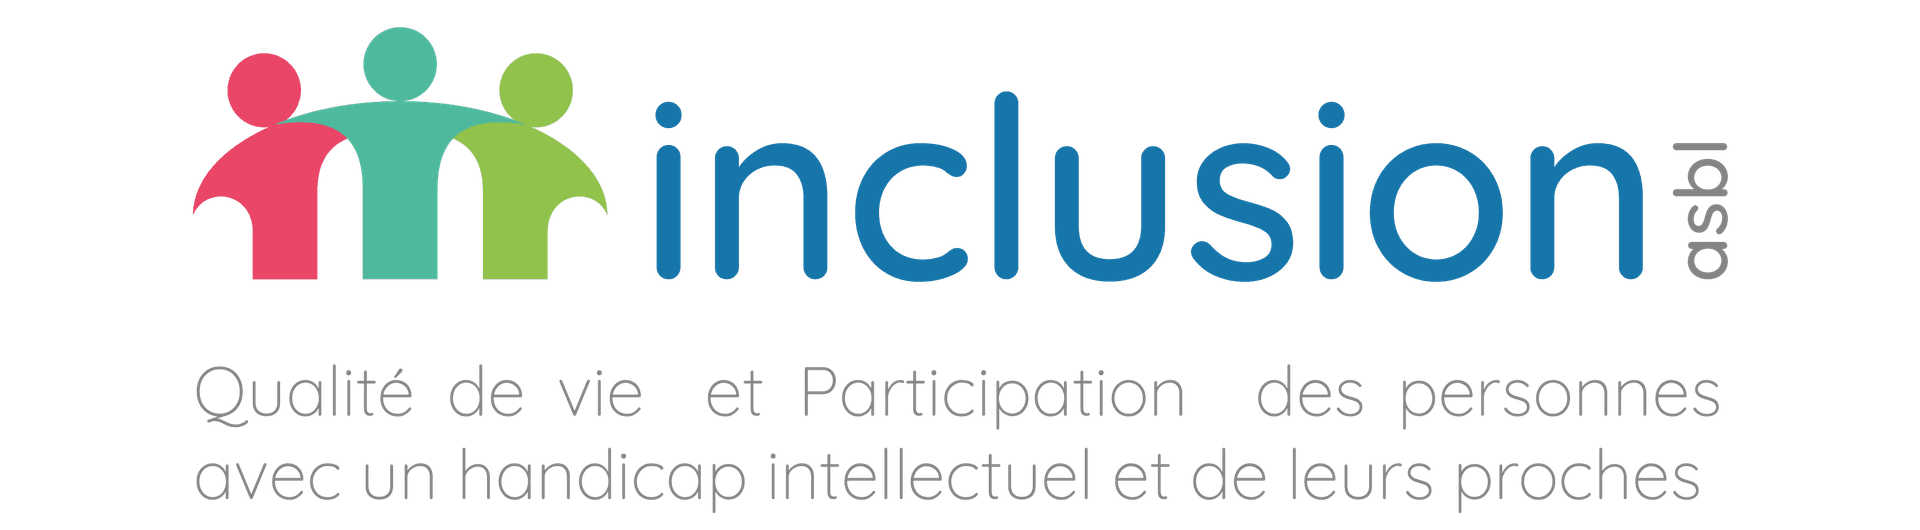 Logo Inclusions Baseline (1)